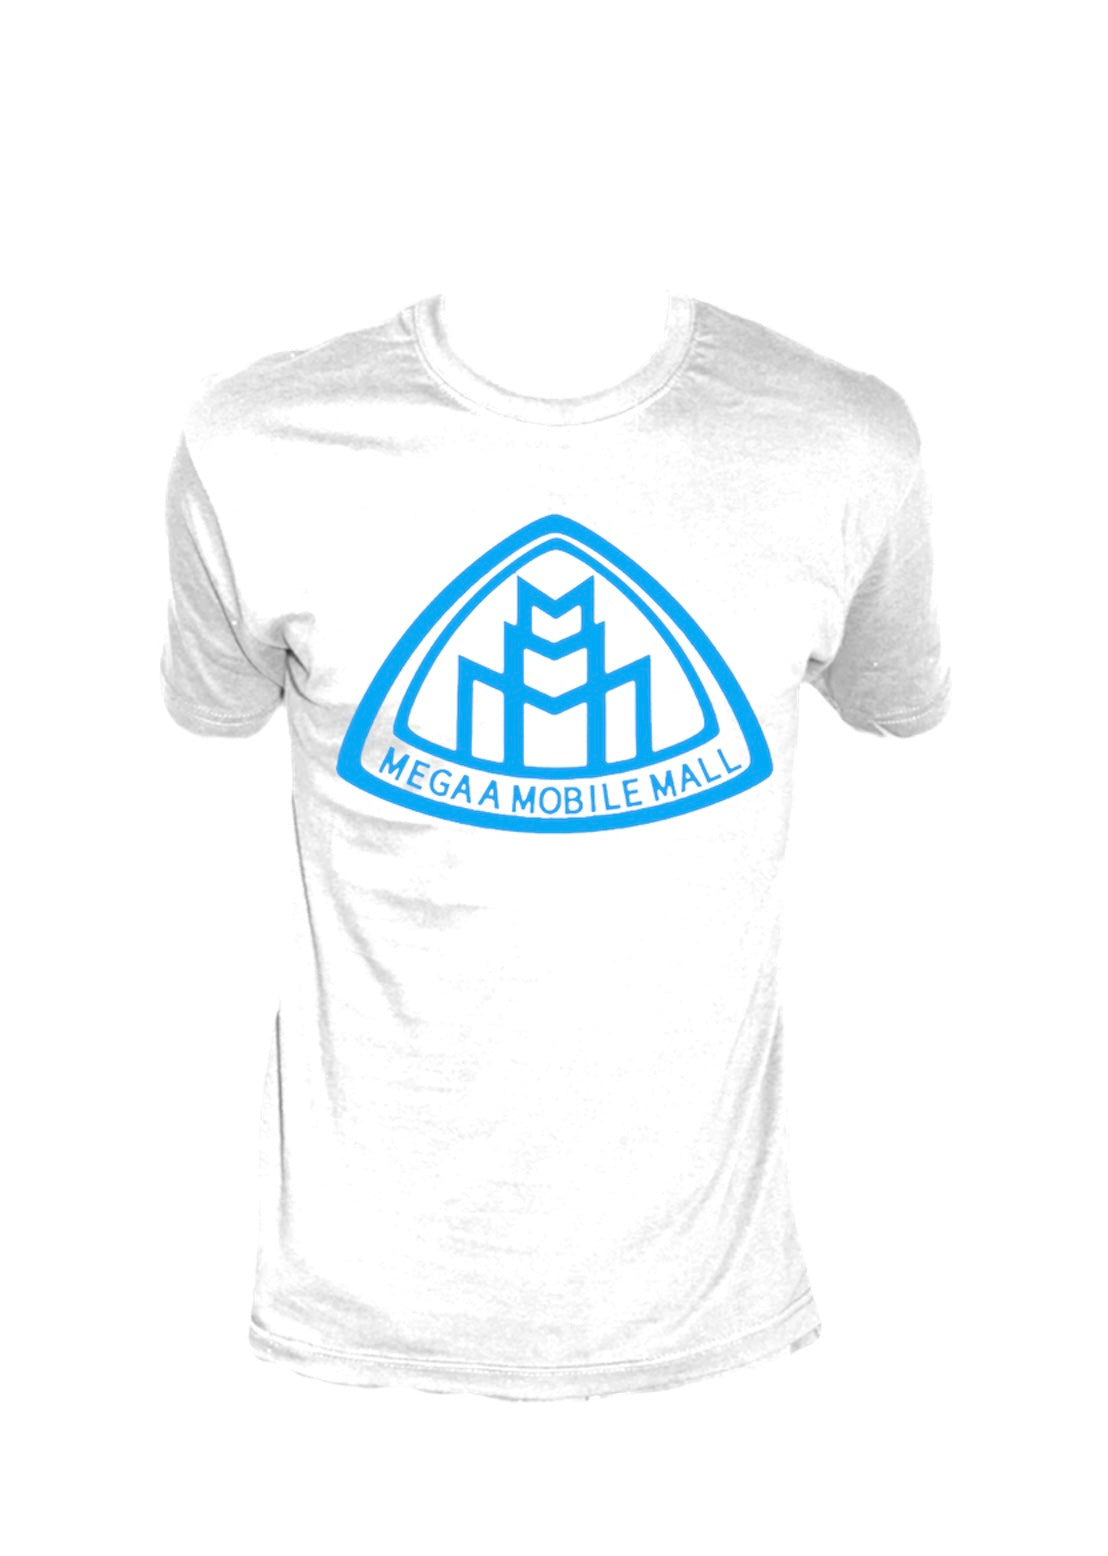 megaamobilemall Logo Shirt sky blue logo